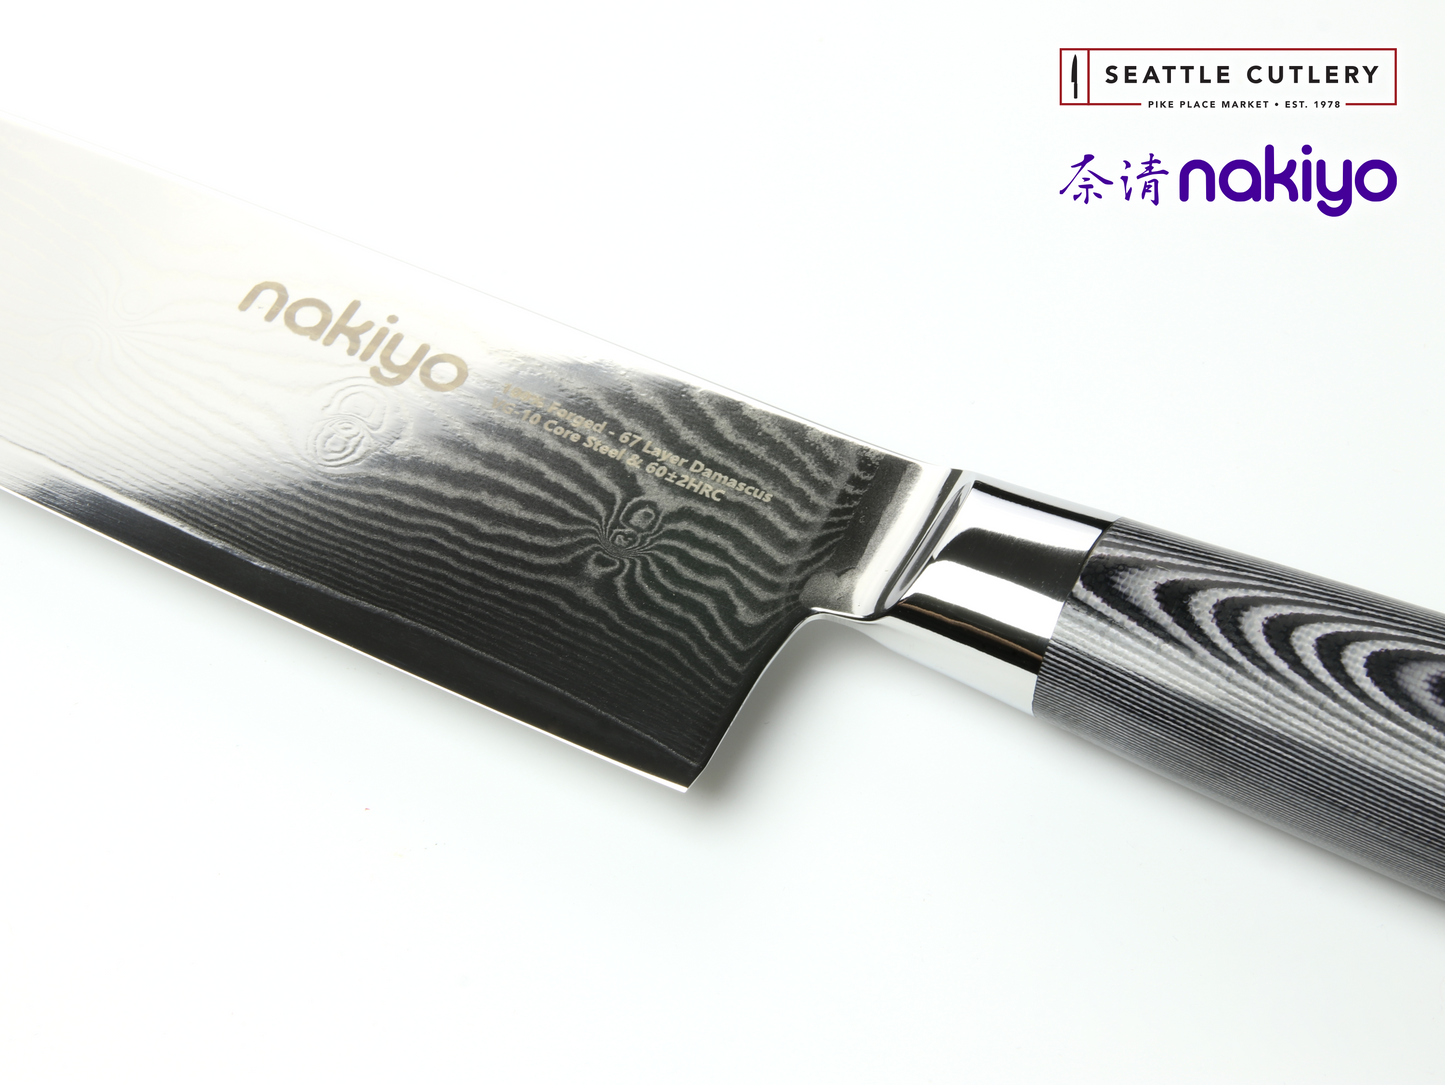 Nakiyo Elite 10" Bread Knife